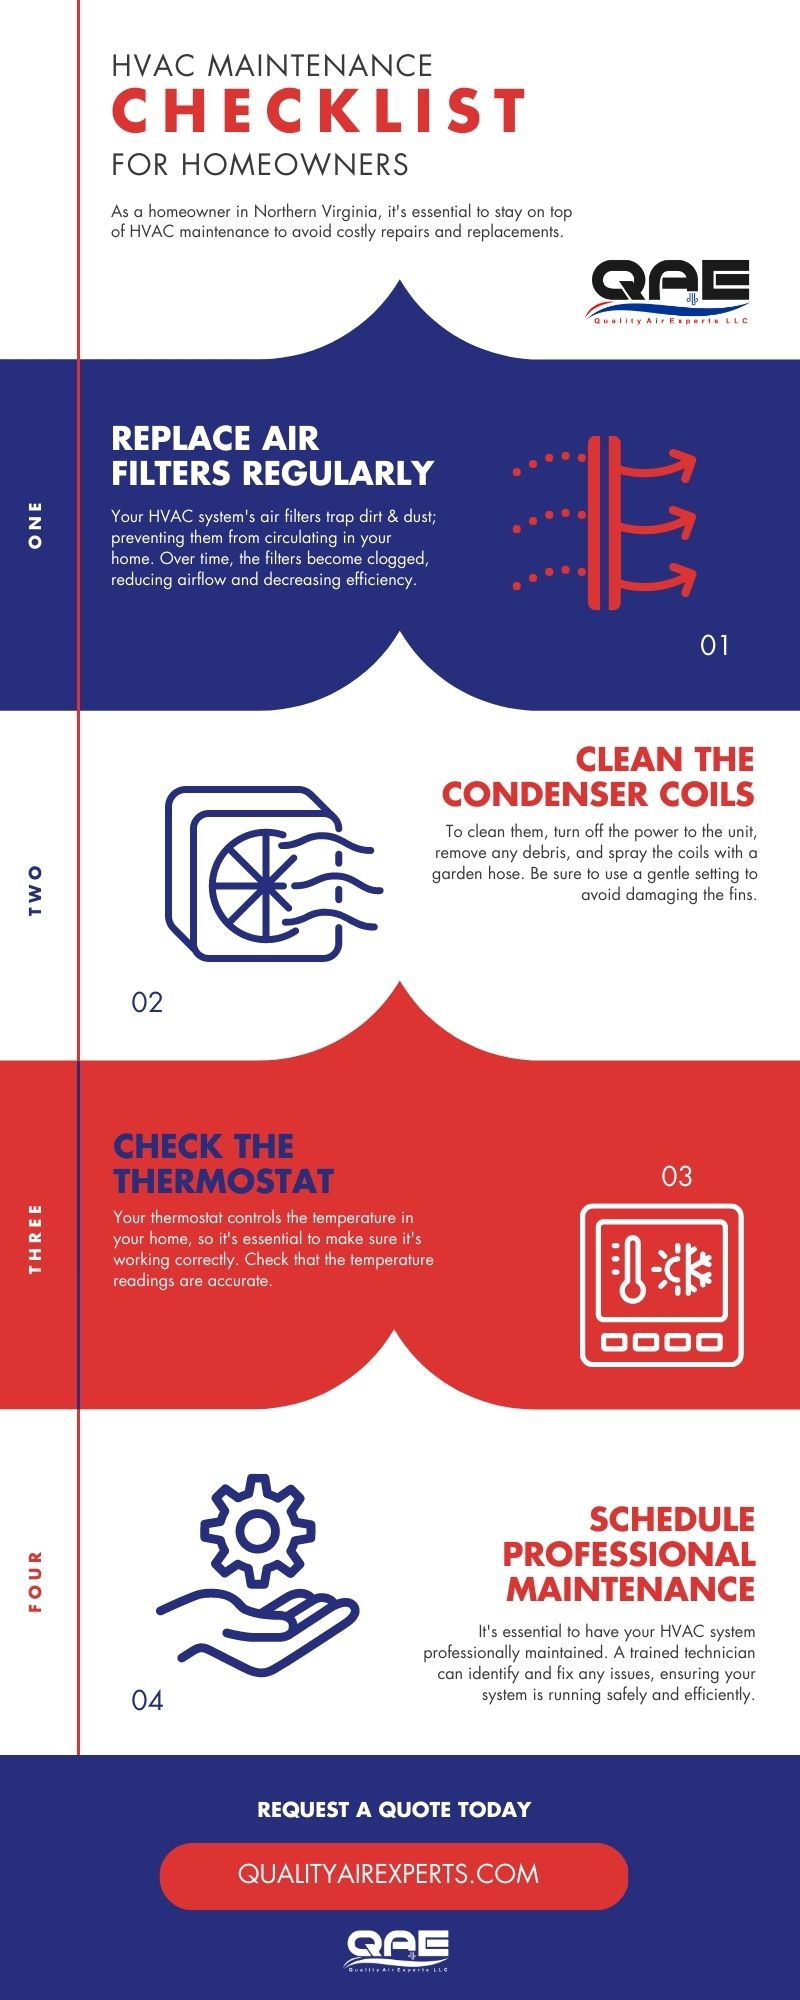 M28363 - Quality Air - Infographic - HVAC Maintenance Checklist for Homeowners.jpg